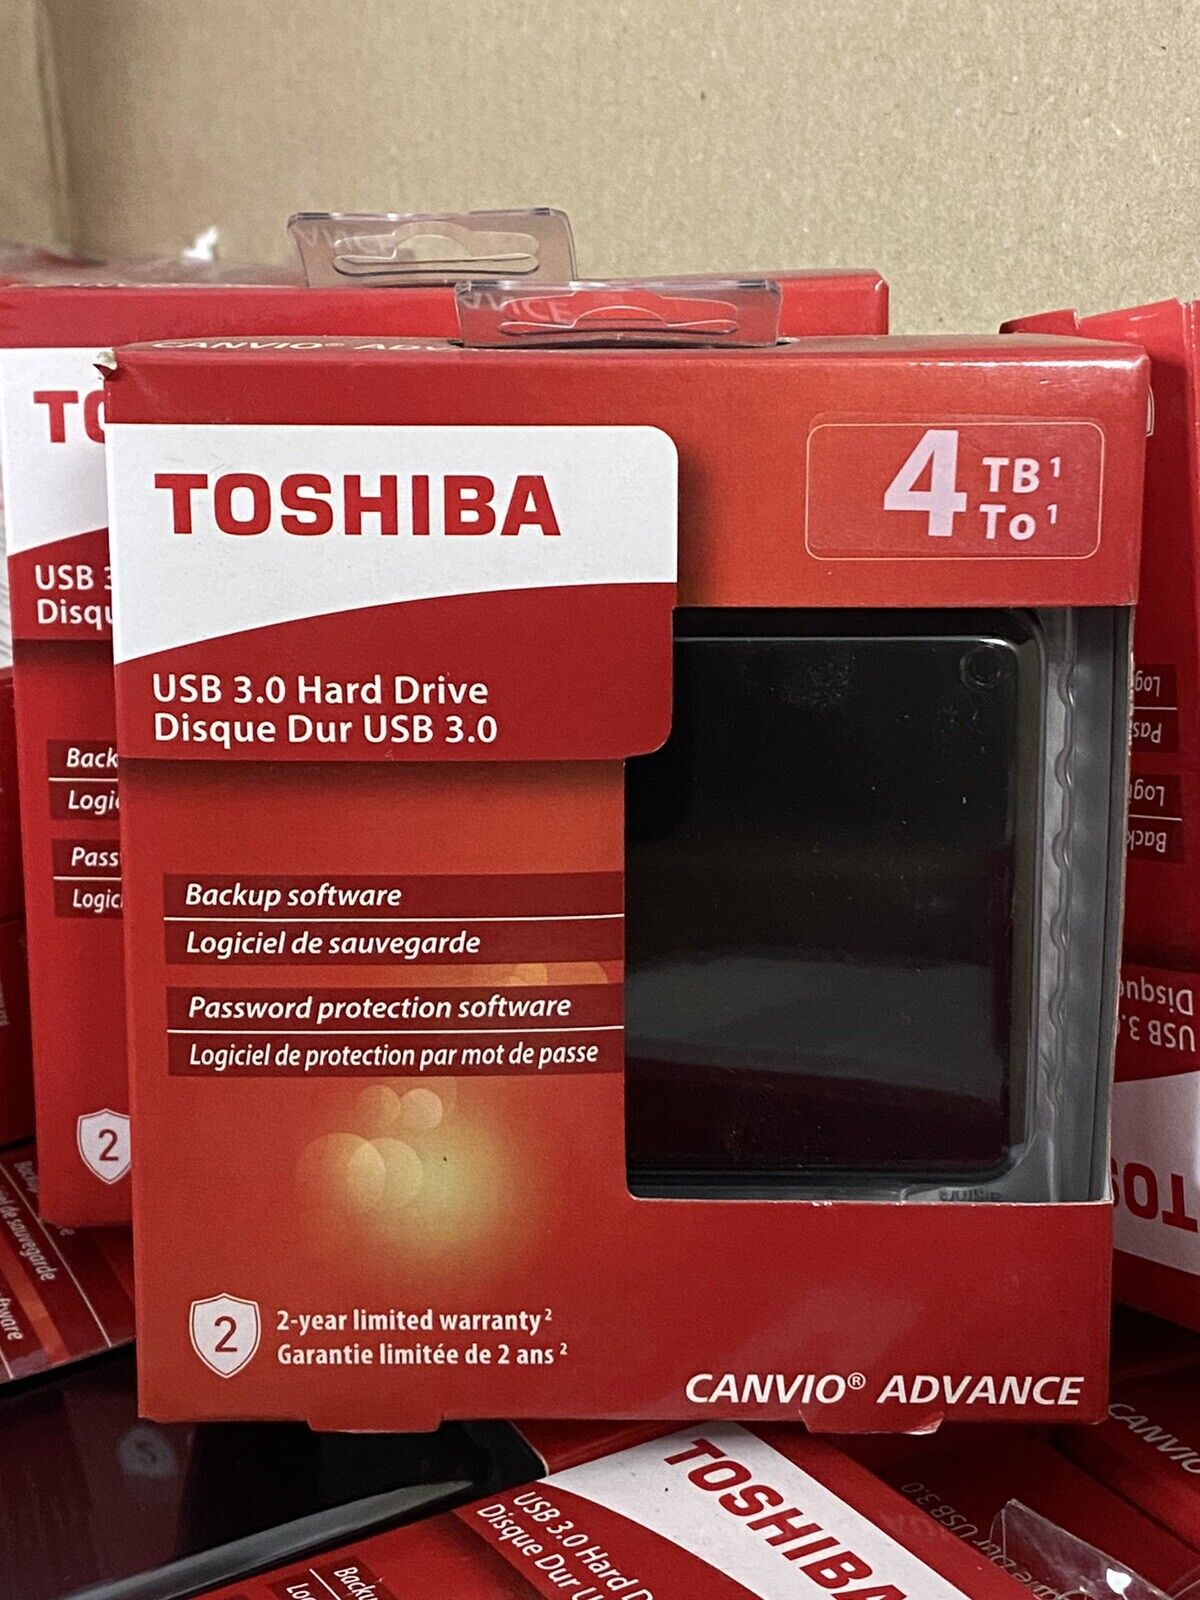 TOSHIBA USB 3.0 Hard Drive Canvio Advance 4TB New